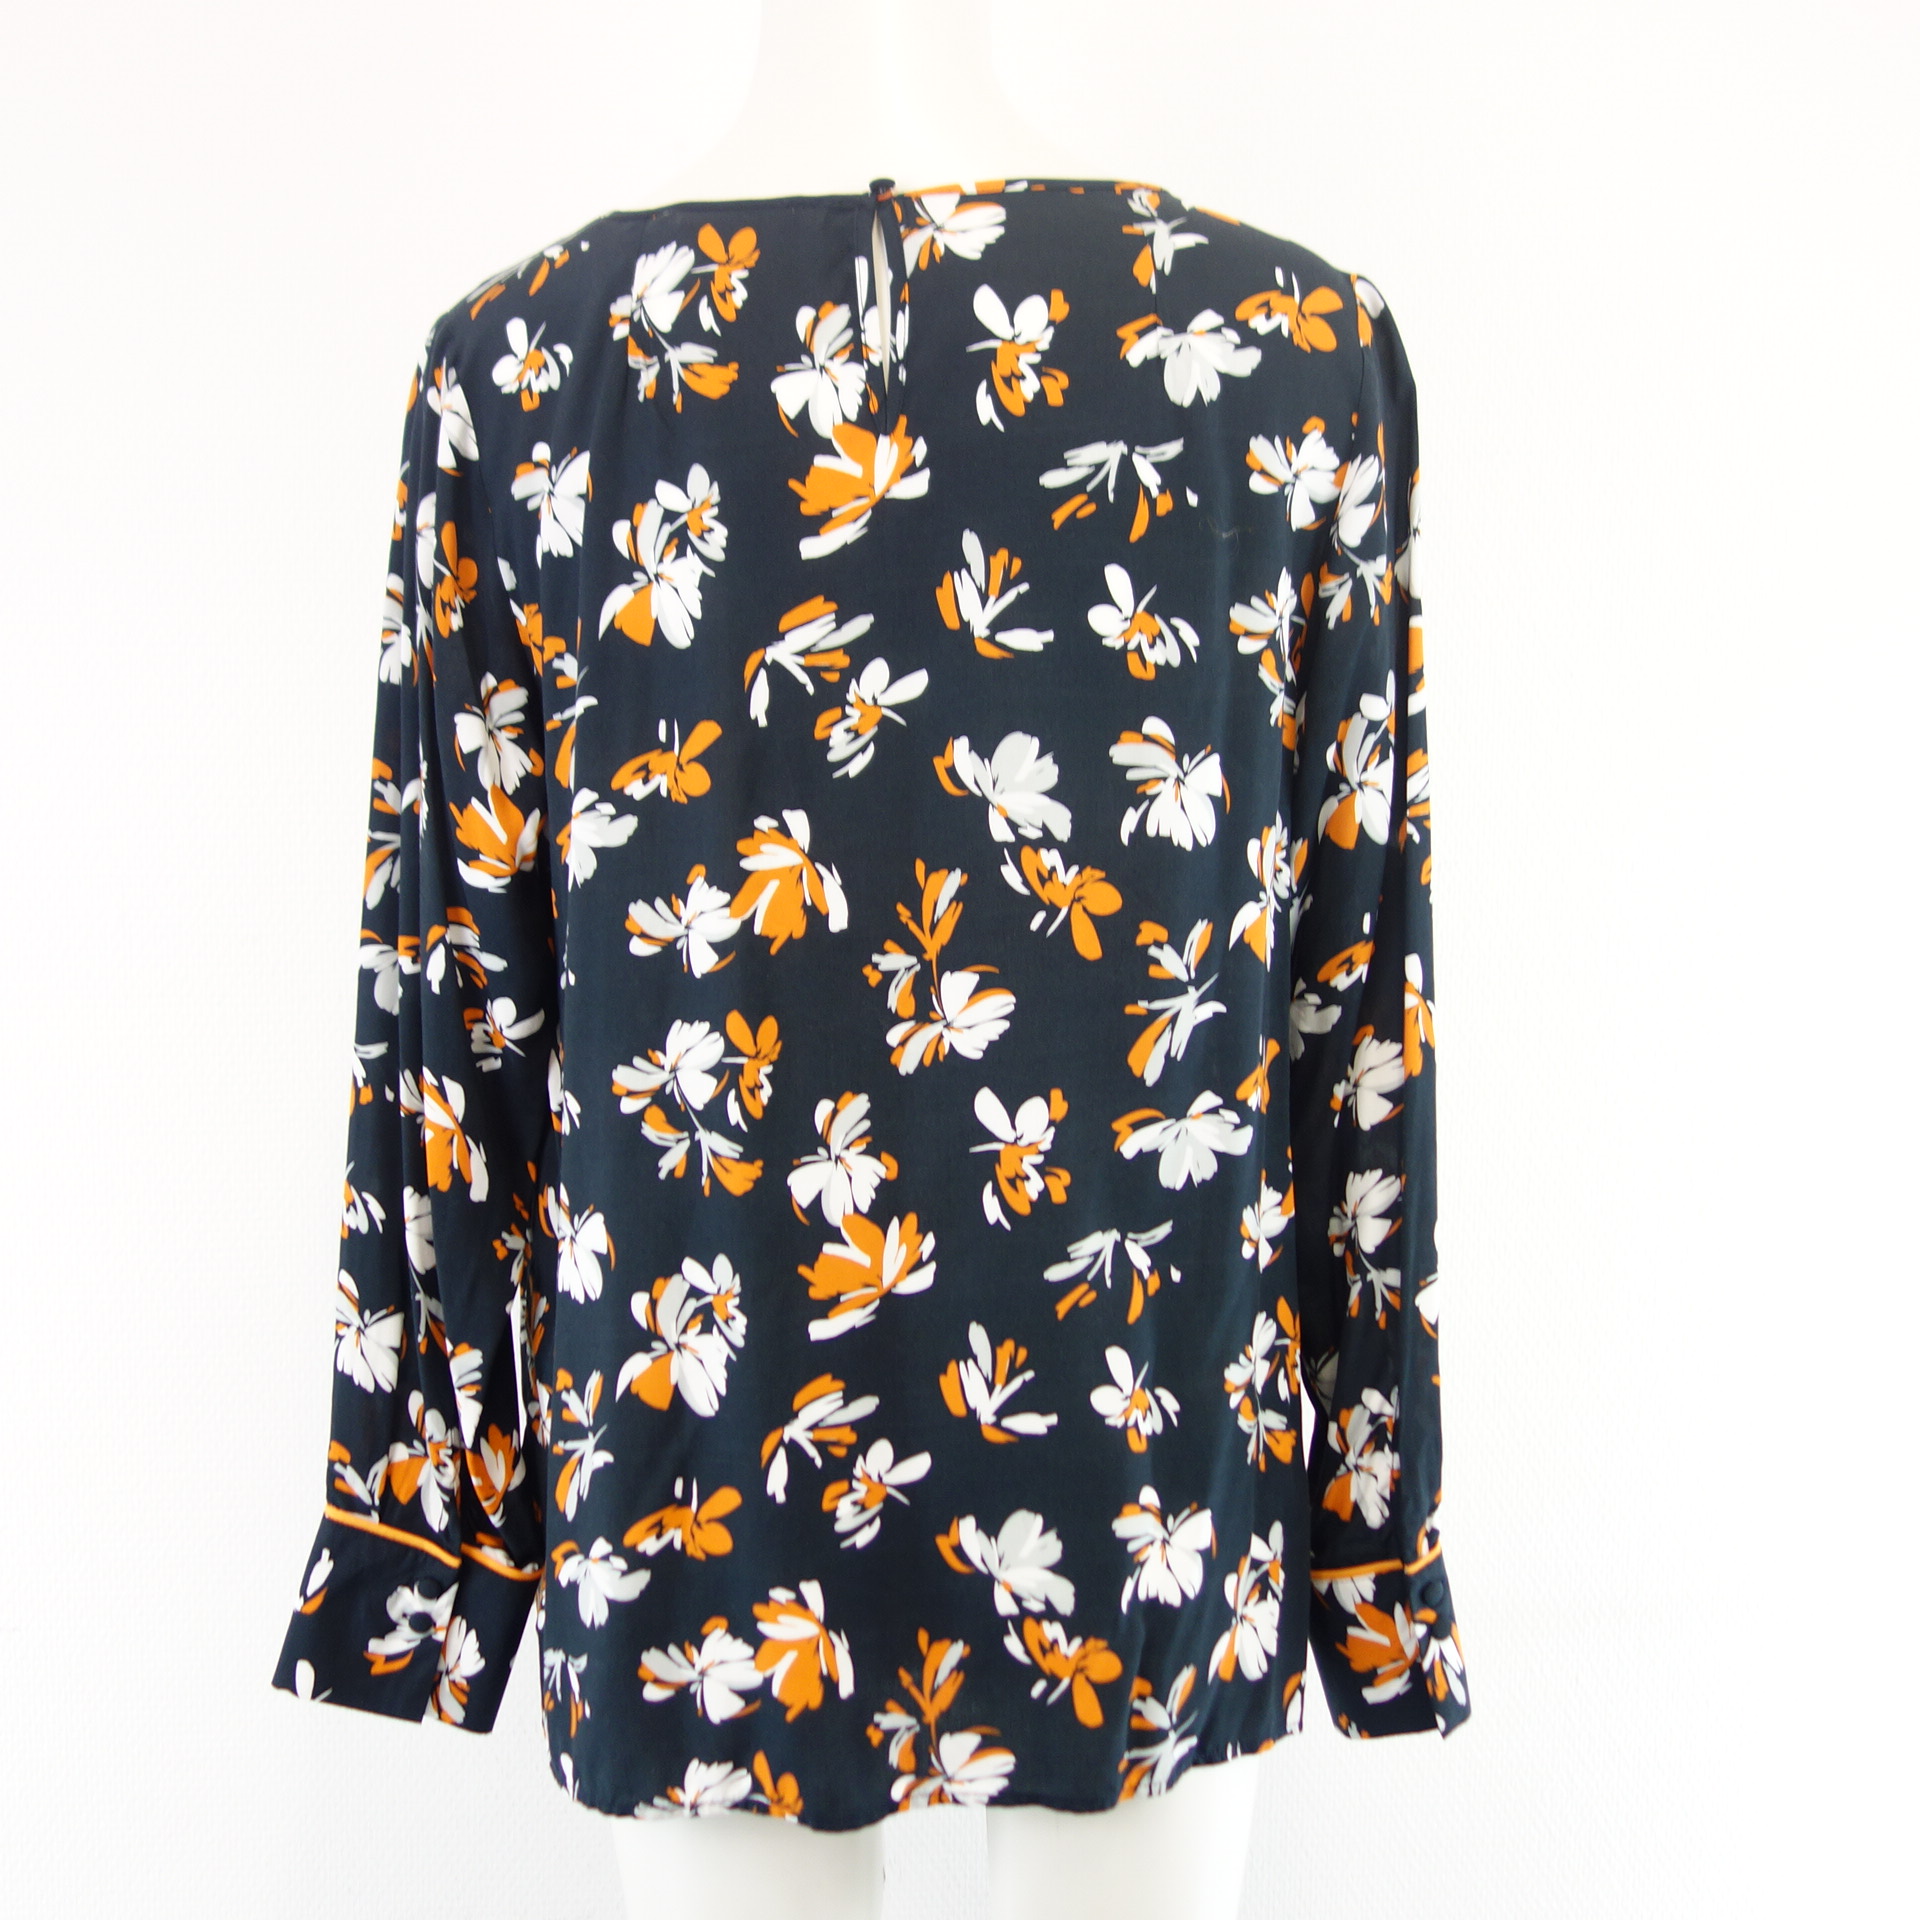 SMITH & SOUL Damen Bluse Tunika Hemd 100% Viskose Größe S Schwarz Orange Grau